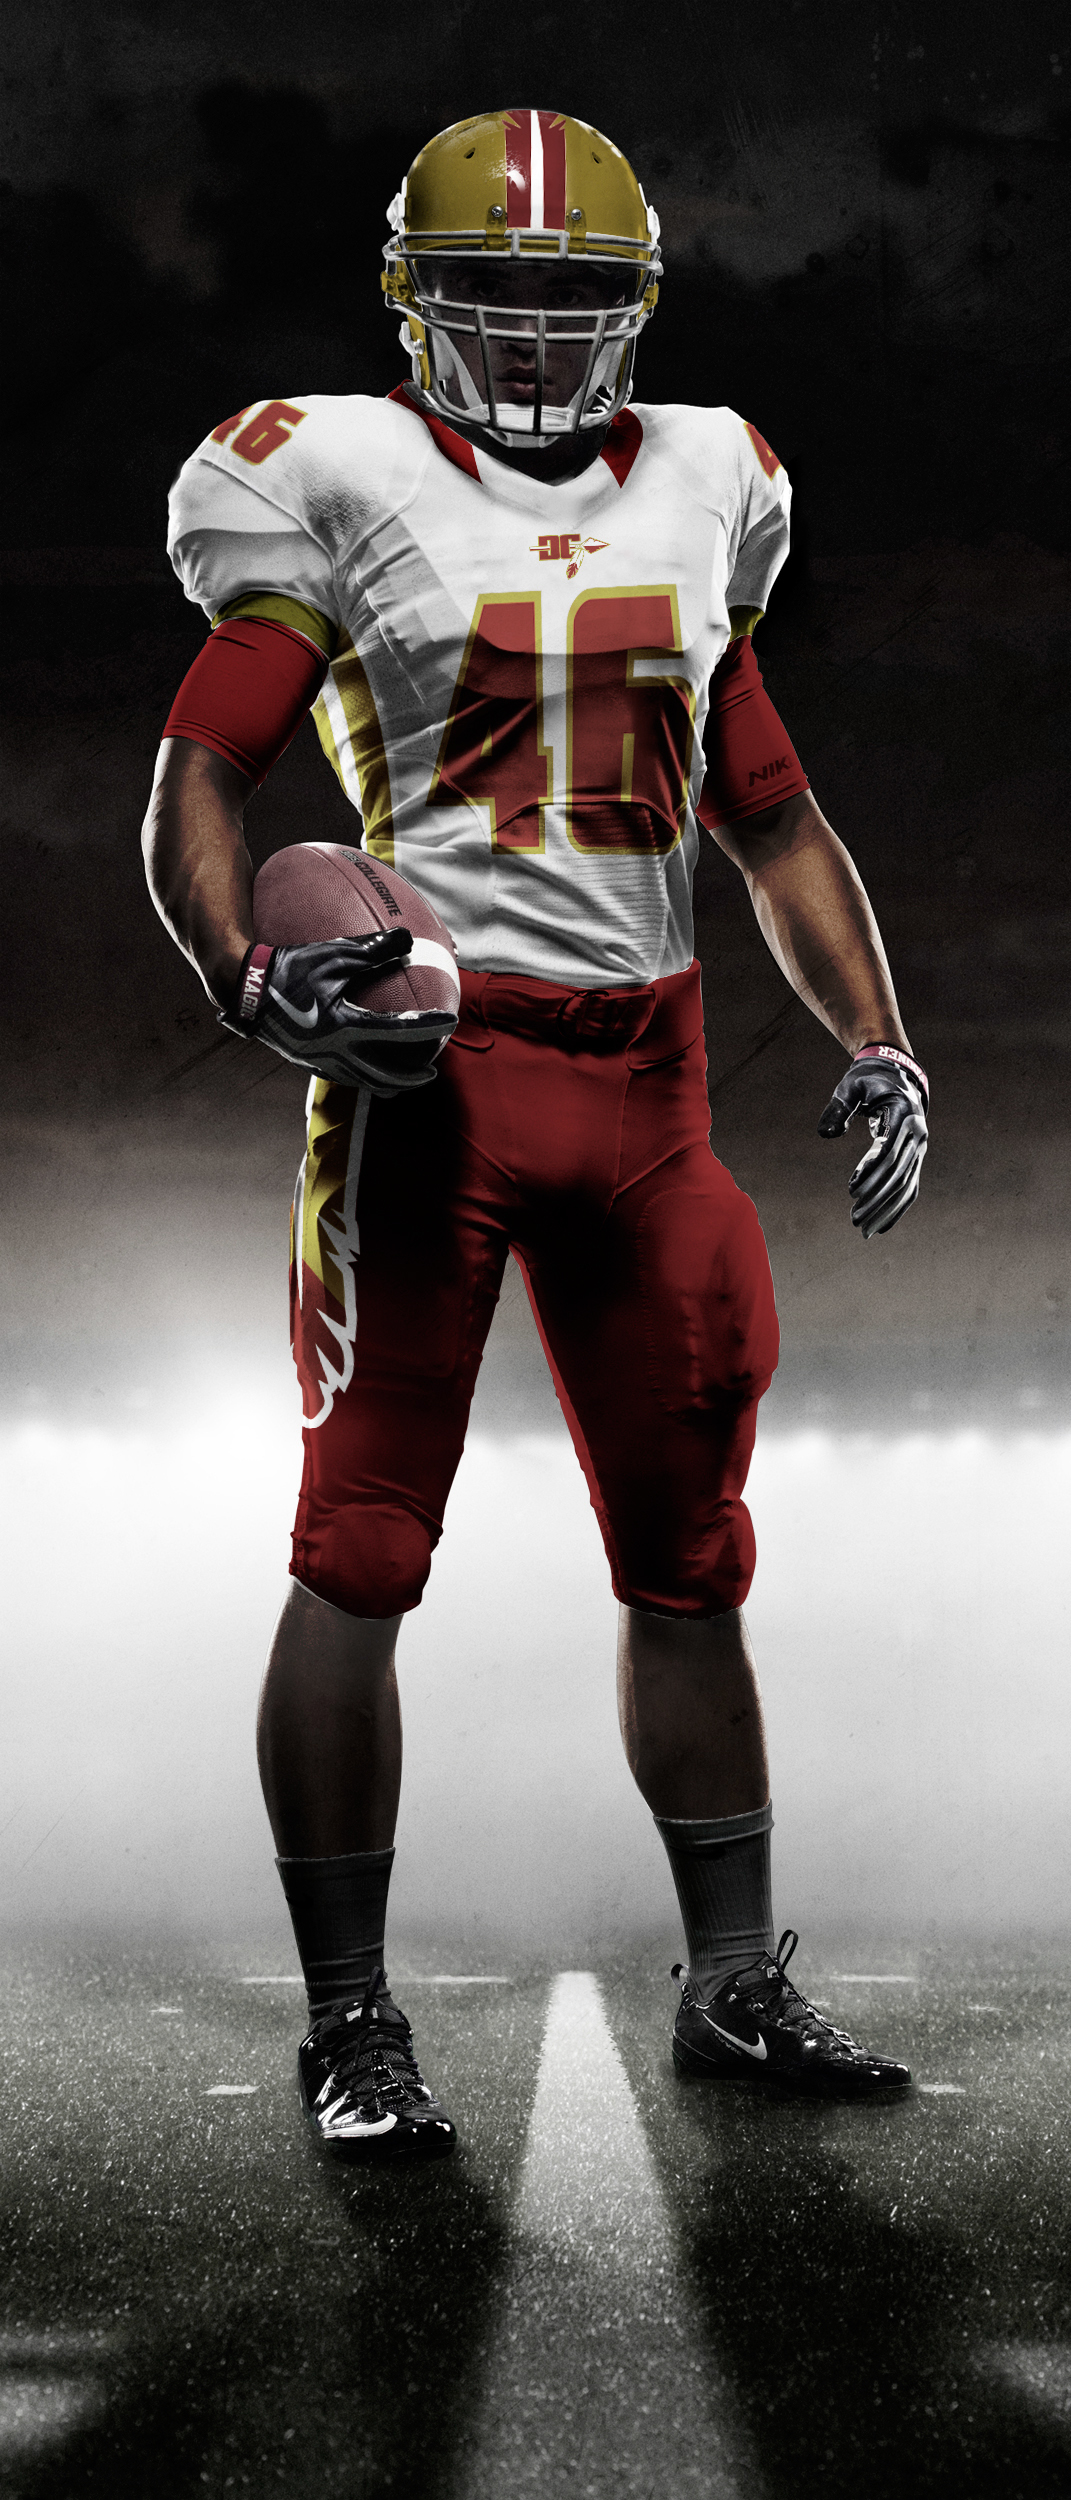 Adobe Portfolio Washington Redskins  #HTTR  RGIII  redesign  warriors  dc  uniforms Redskins Jerseys rg3 customink  Equality tolerance  cultural change